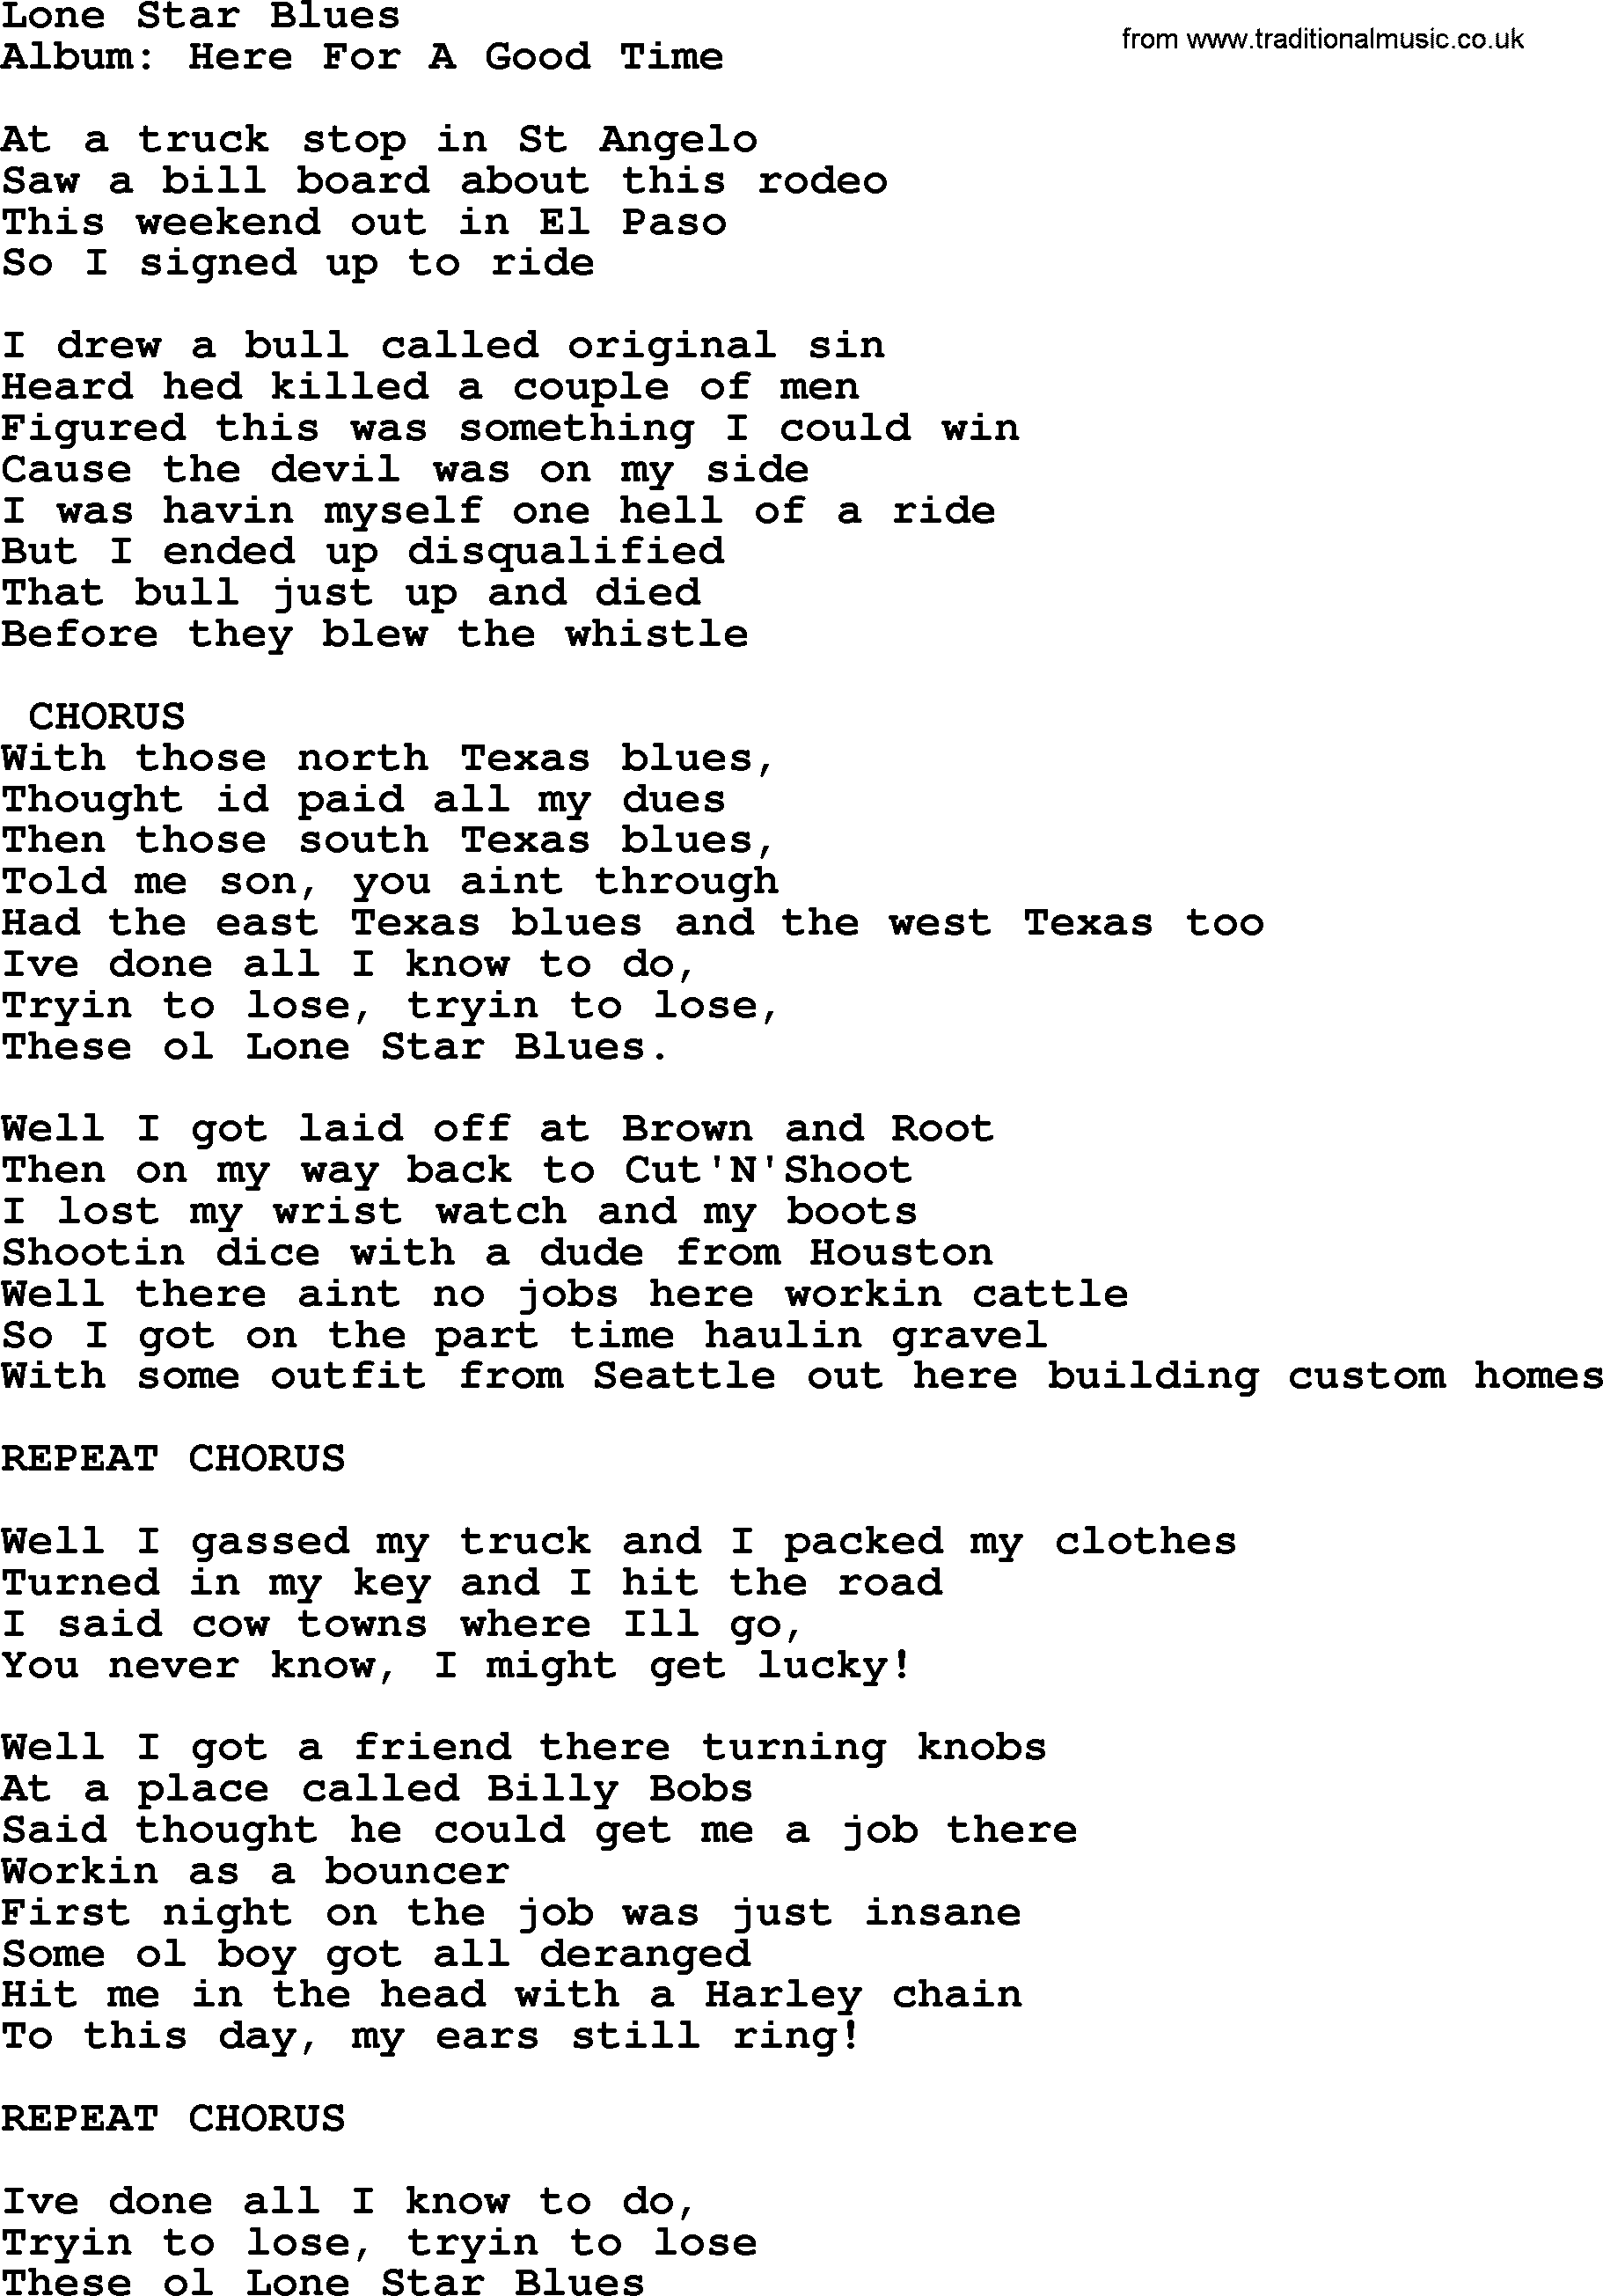 George Strait song: Lone Star Blues, lyrics